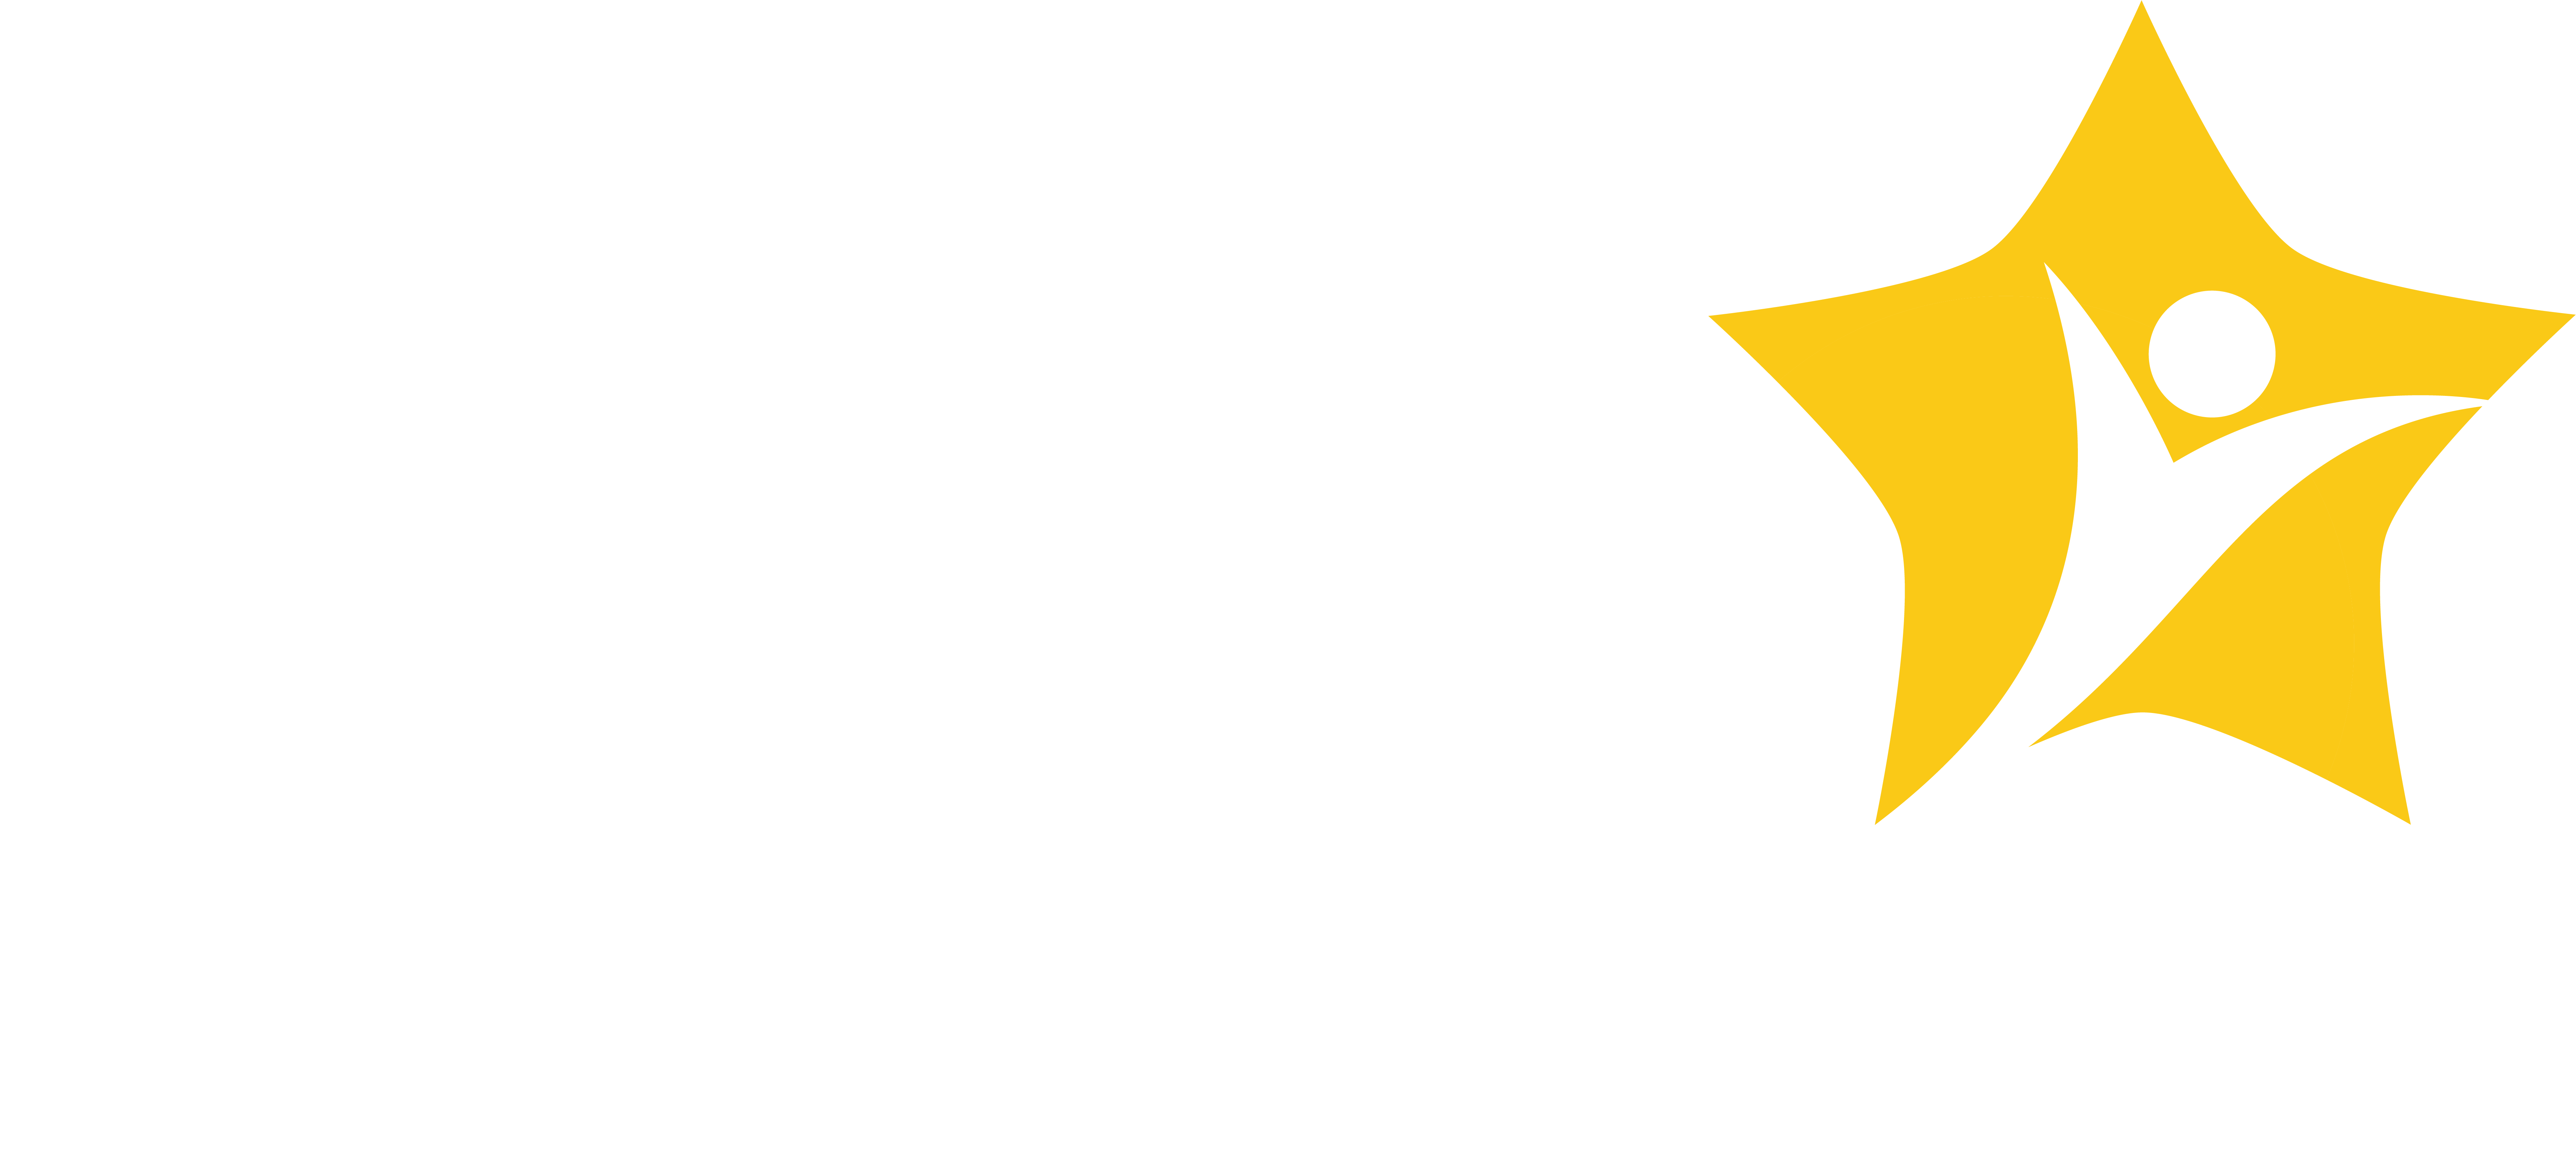 Civics for Life logo